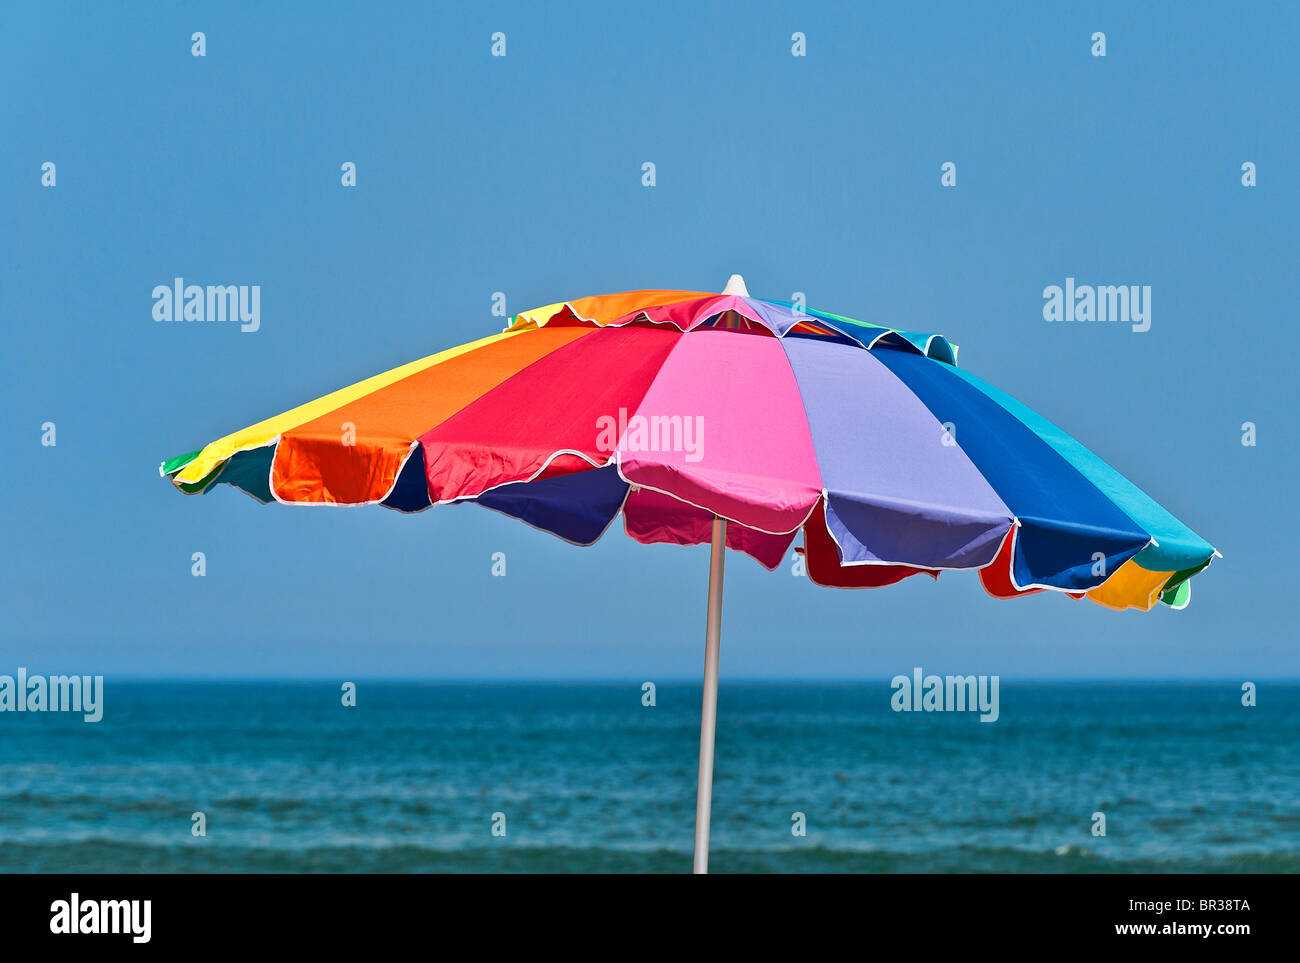 Colorful beach umbrella. Stock Photo